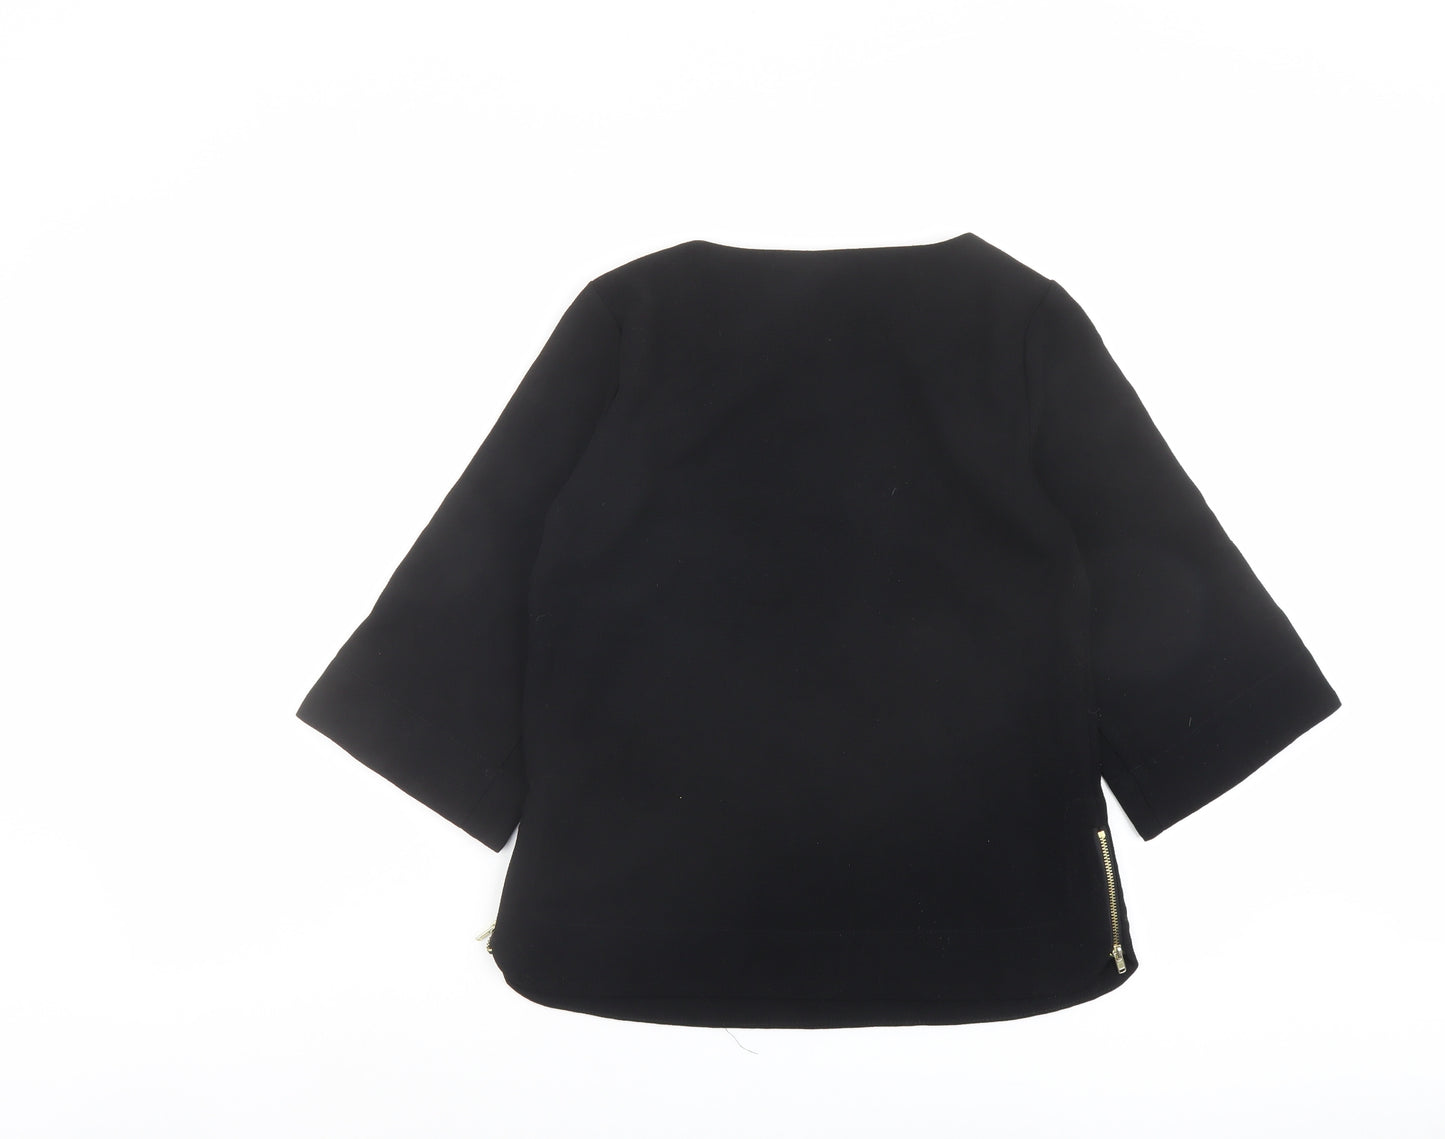 Warehouse Womens Black Polyester Basic Blouse Size 8 Round Neck